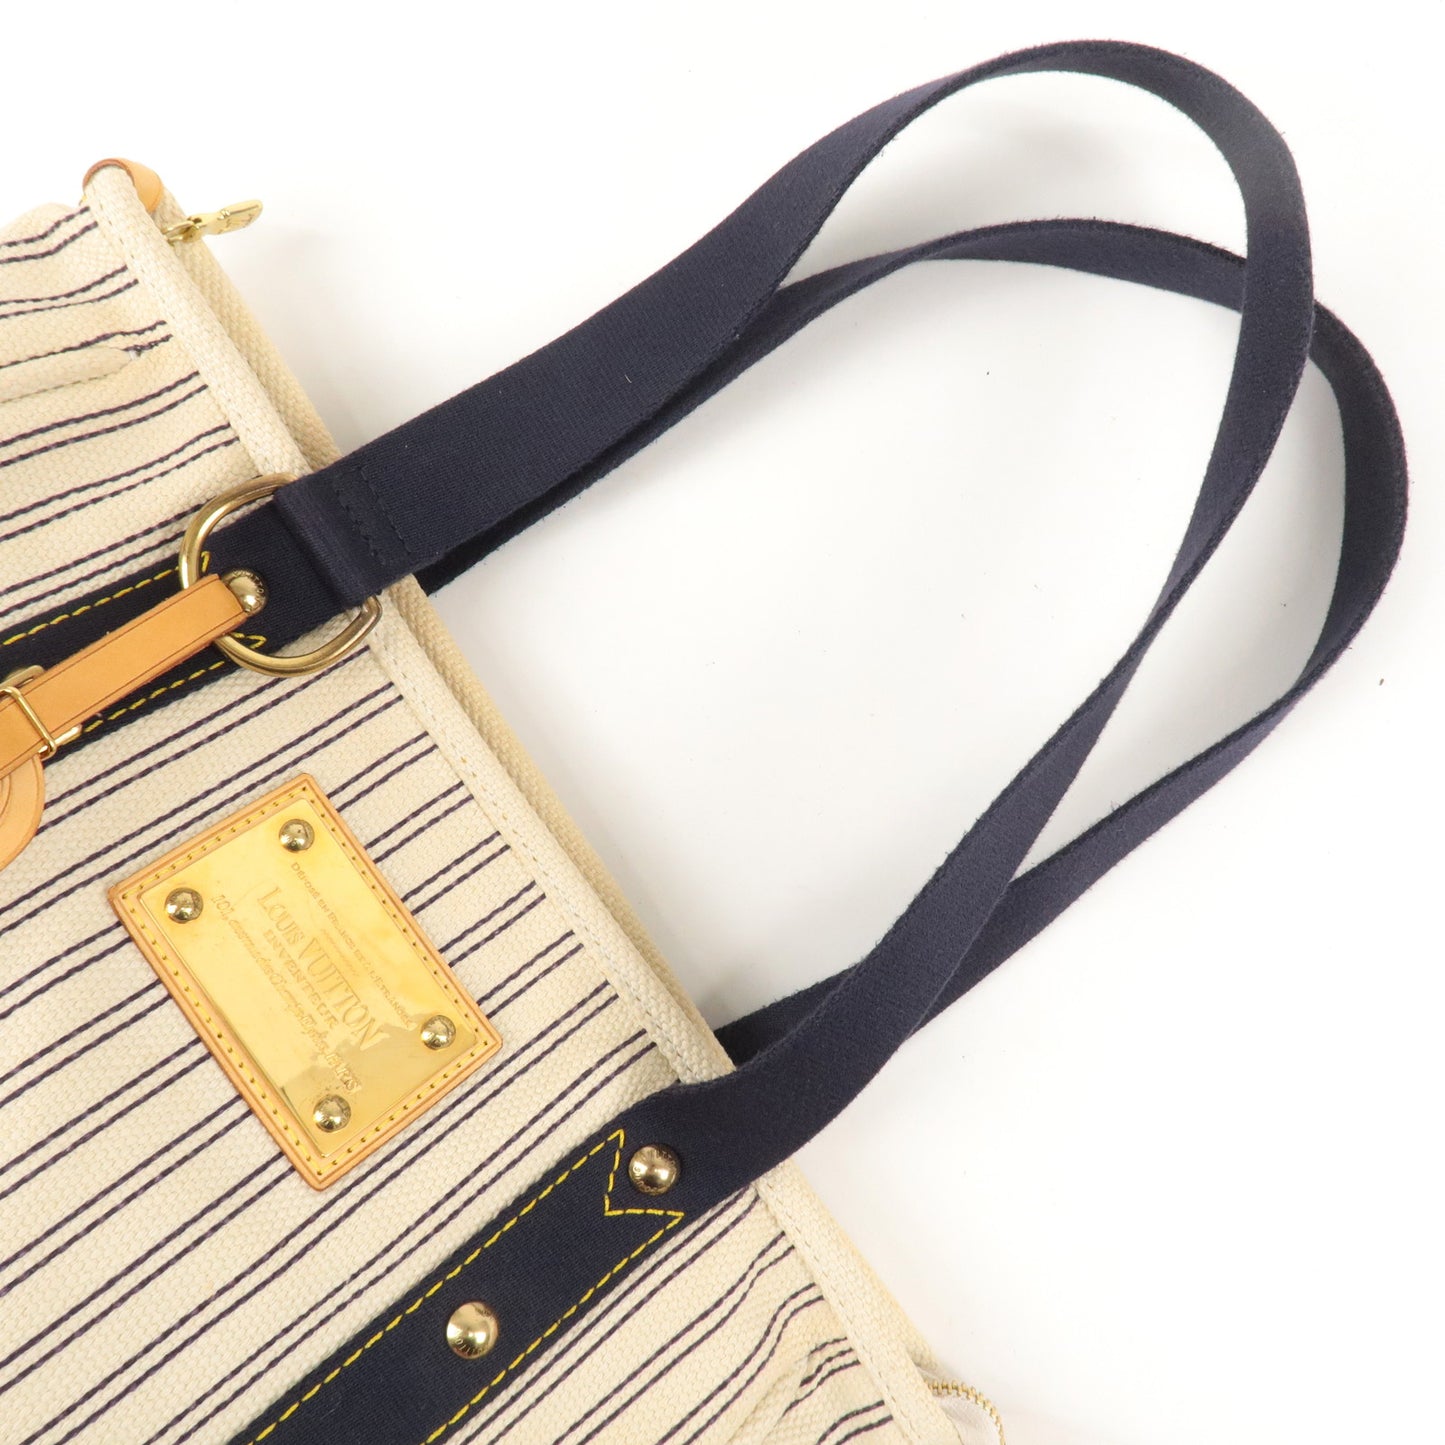 Louis-Vuitton-Antigua-Cabas-MM-Tote-Bag-Navy-Stripe-M40132 – dct-ep_vintage  luxury Store